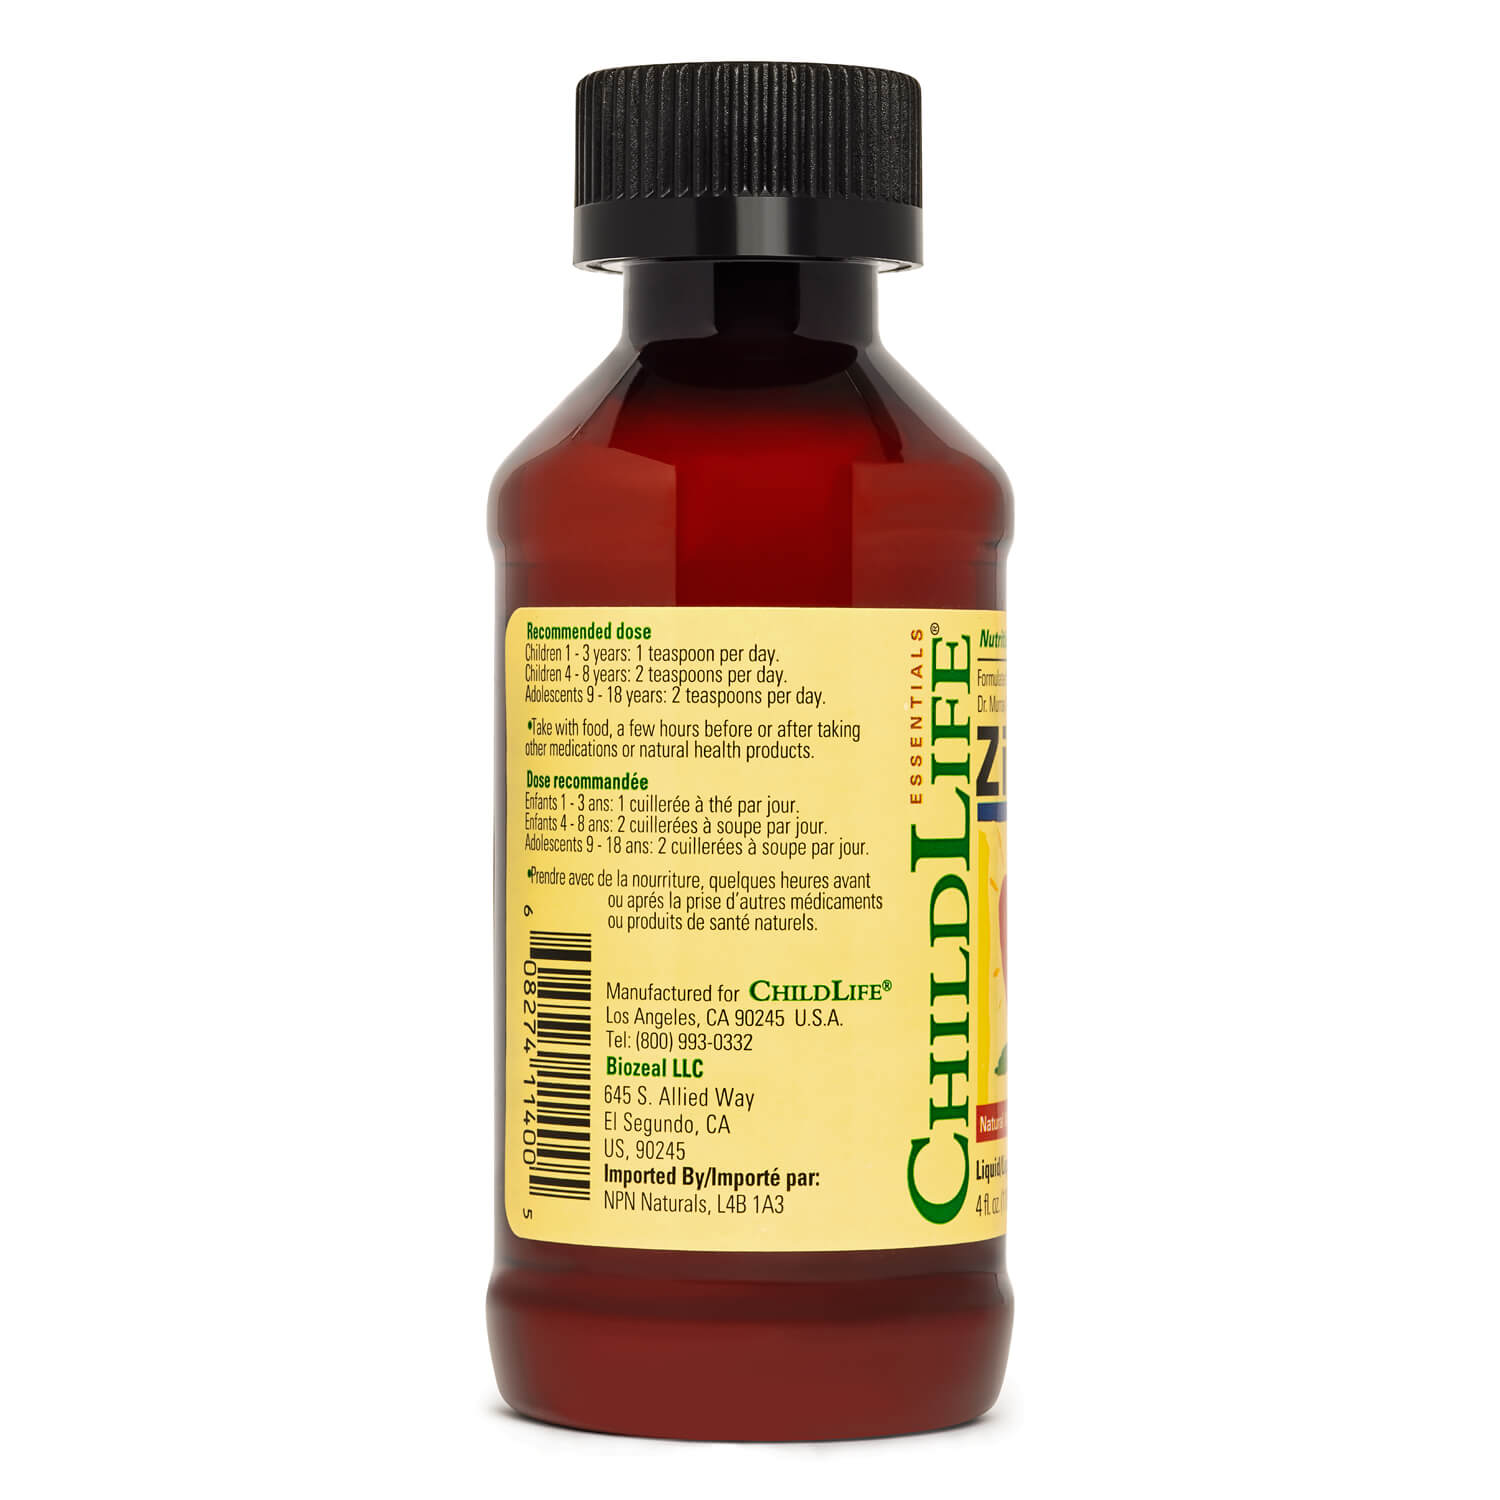 ChilfLife Essentials  Zinc Plus®, Natural Mango Strawberry Flavour, 118ml